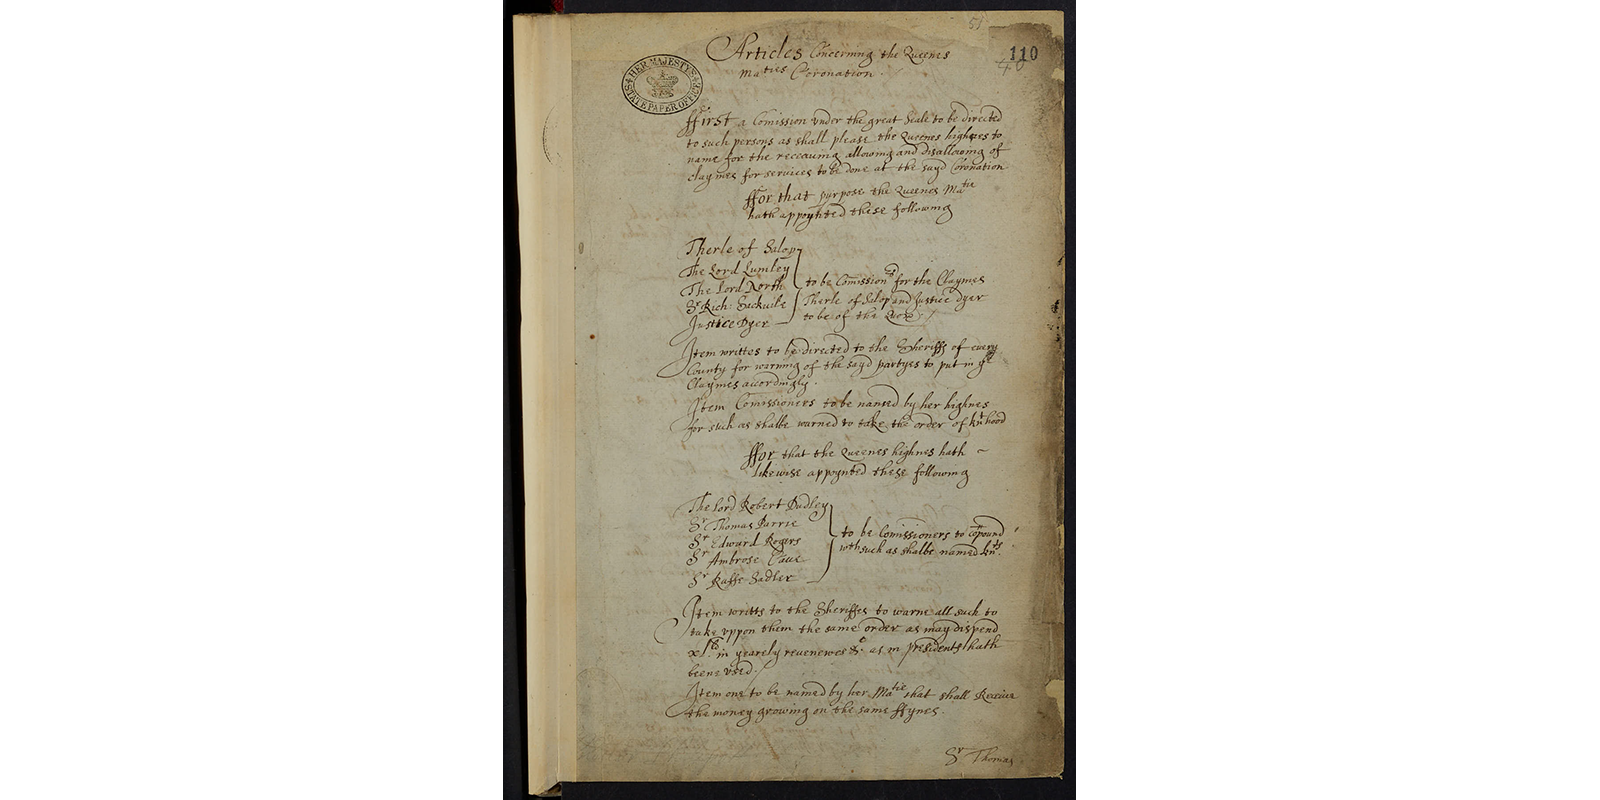 Plans for Elizabeth I's coronation, hand-written in English.